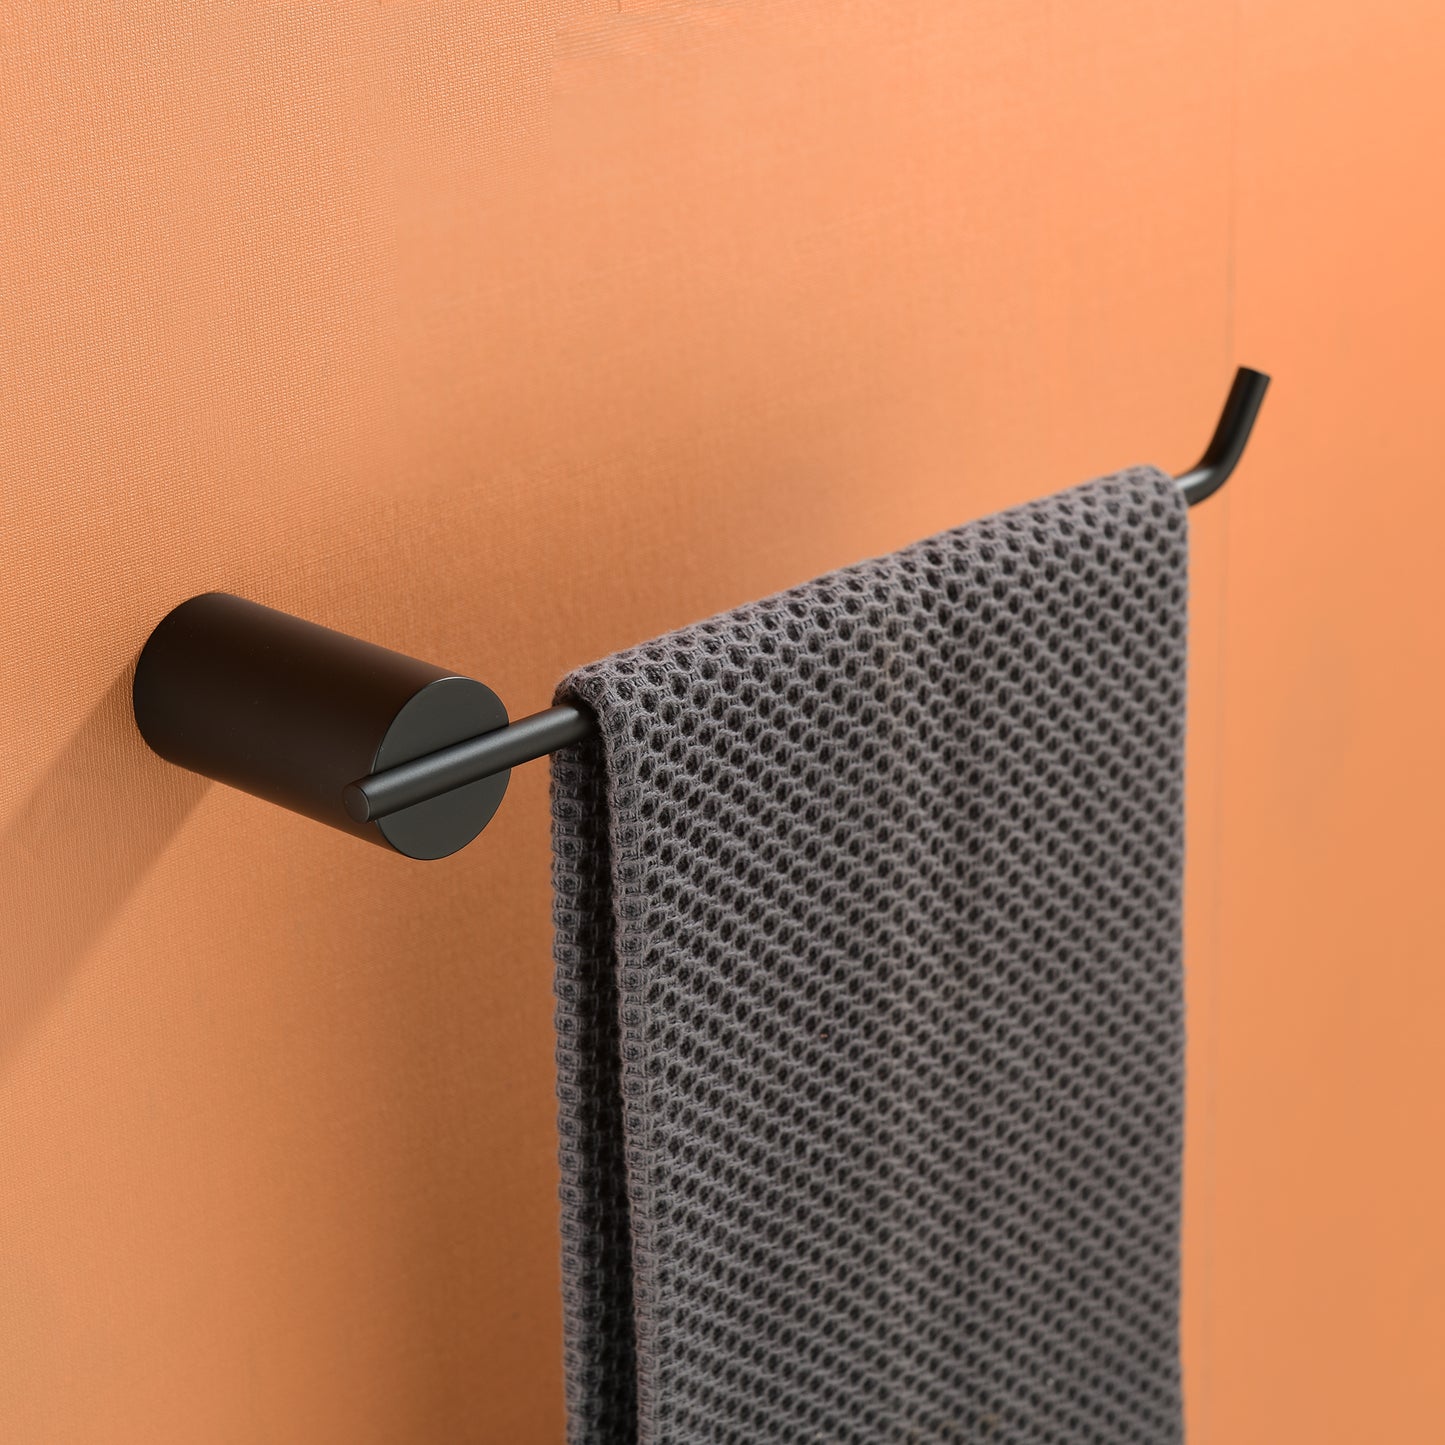 4 Piece Stainless Steel Bathroom Towel Rack Set Wall Mount